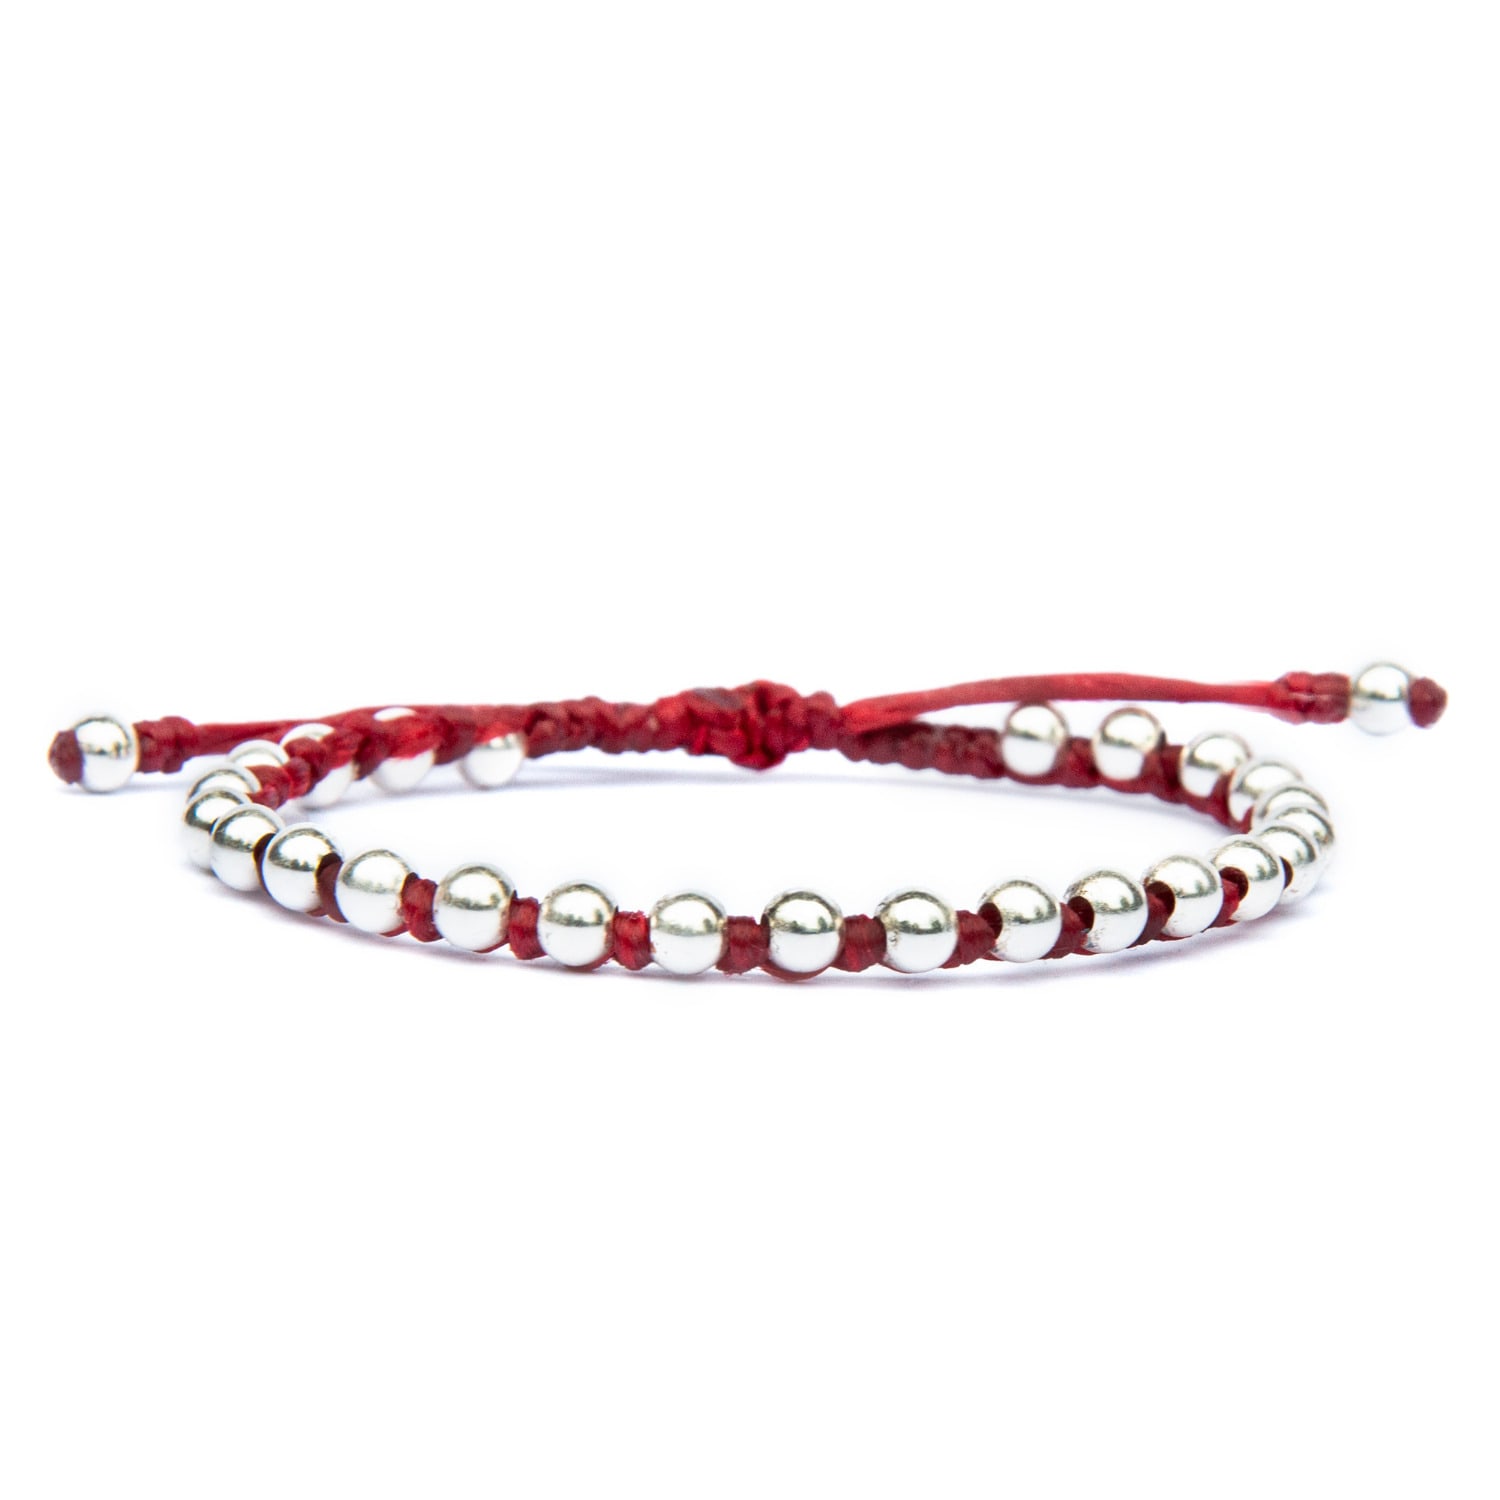 Women’s Red Rope Friendship Bracelet With Silver Beads - Elegant And Adjustable Harbour Uk Bracelets